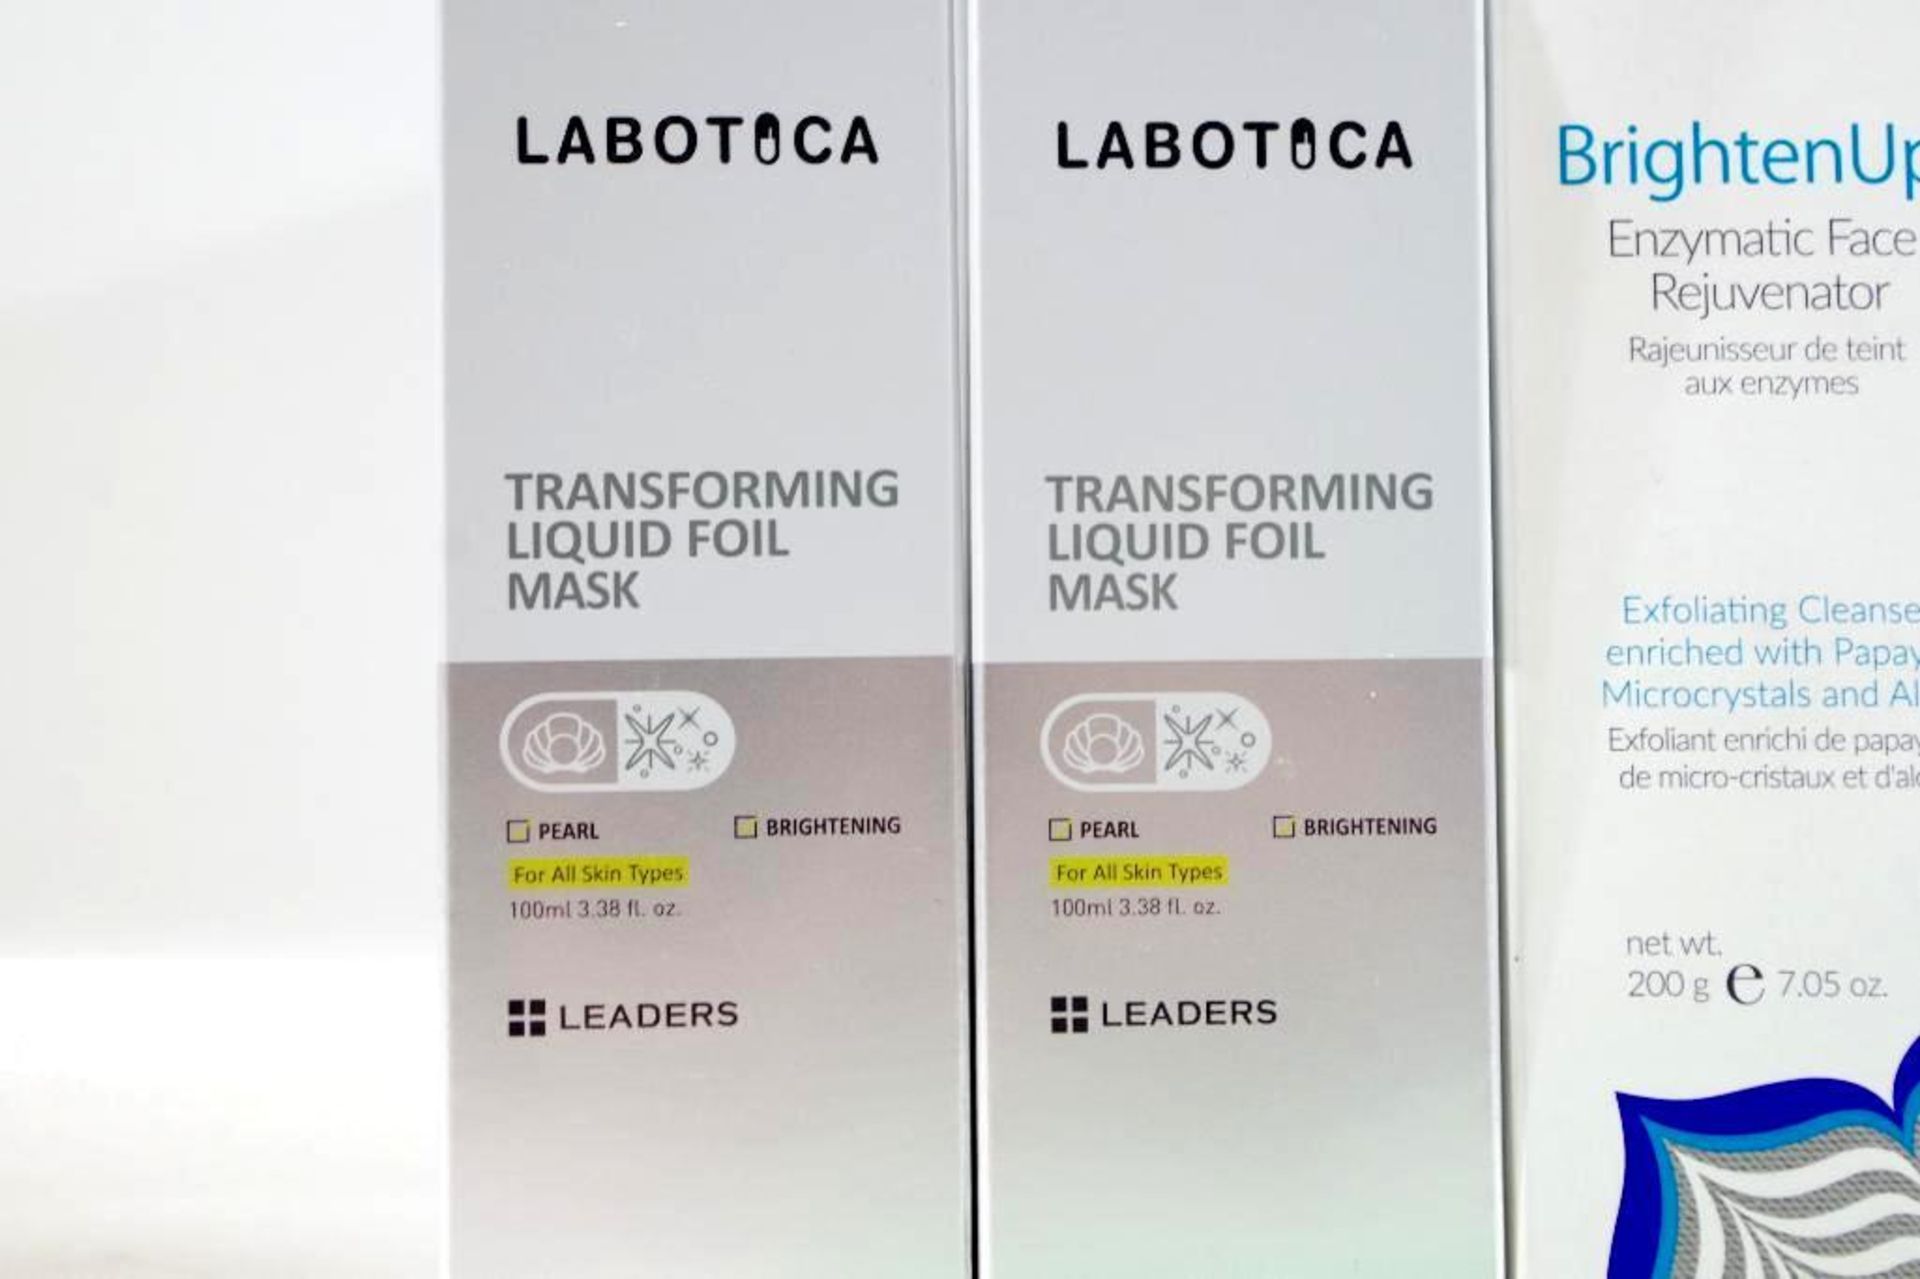 [QTY] NEW VASANTI Face Rejuvenator, LABOTICA Transforming Liquid Foil Mask, etc. - Image 3 of 4